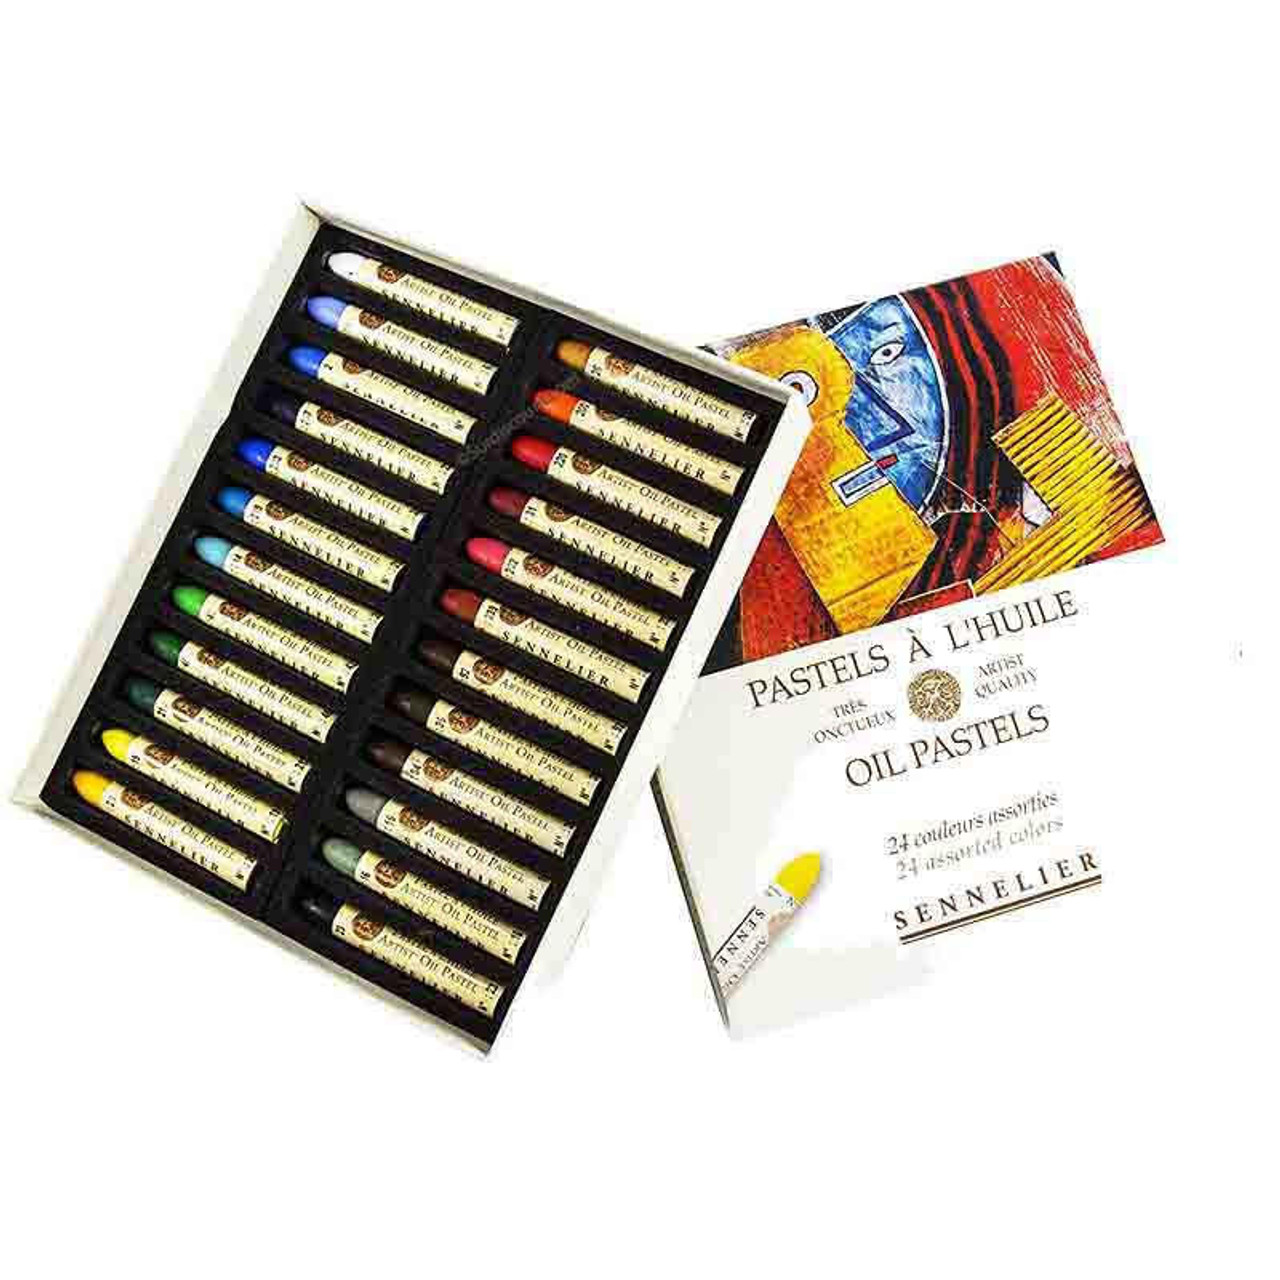 Sharpie Marker - Set - 12-Color Assorted Fine Set - Sam Flax Atlanta